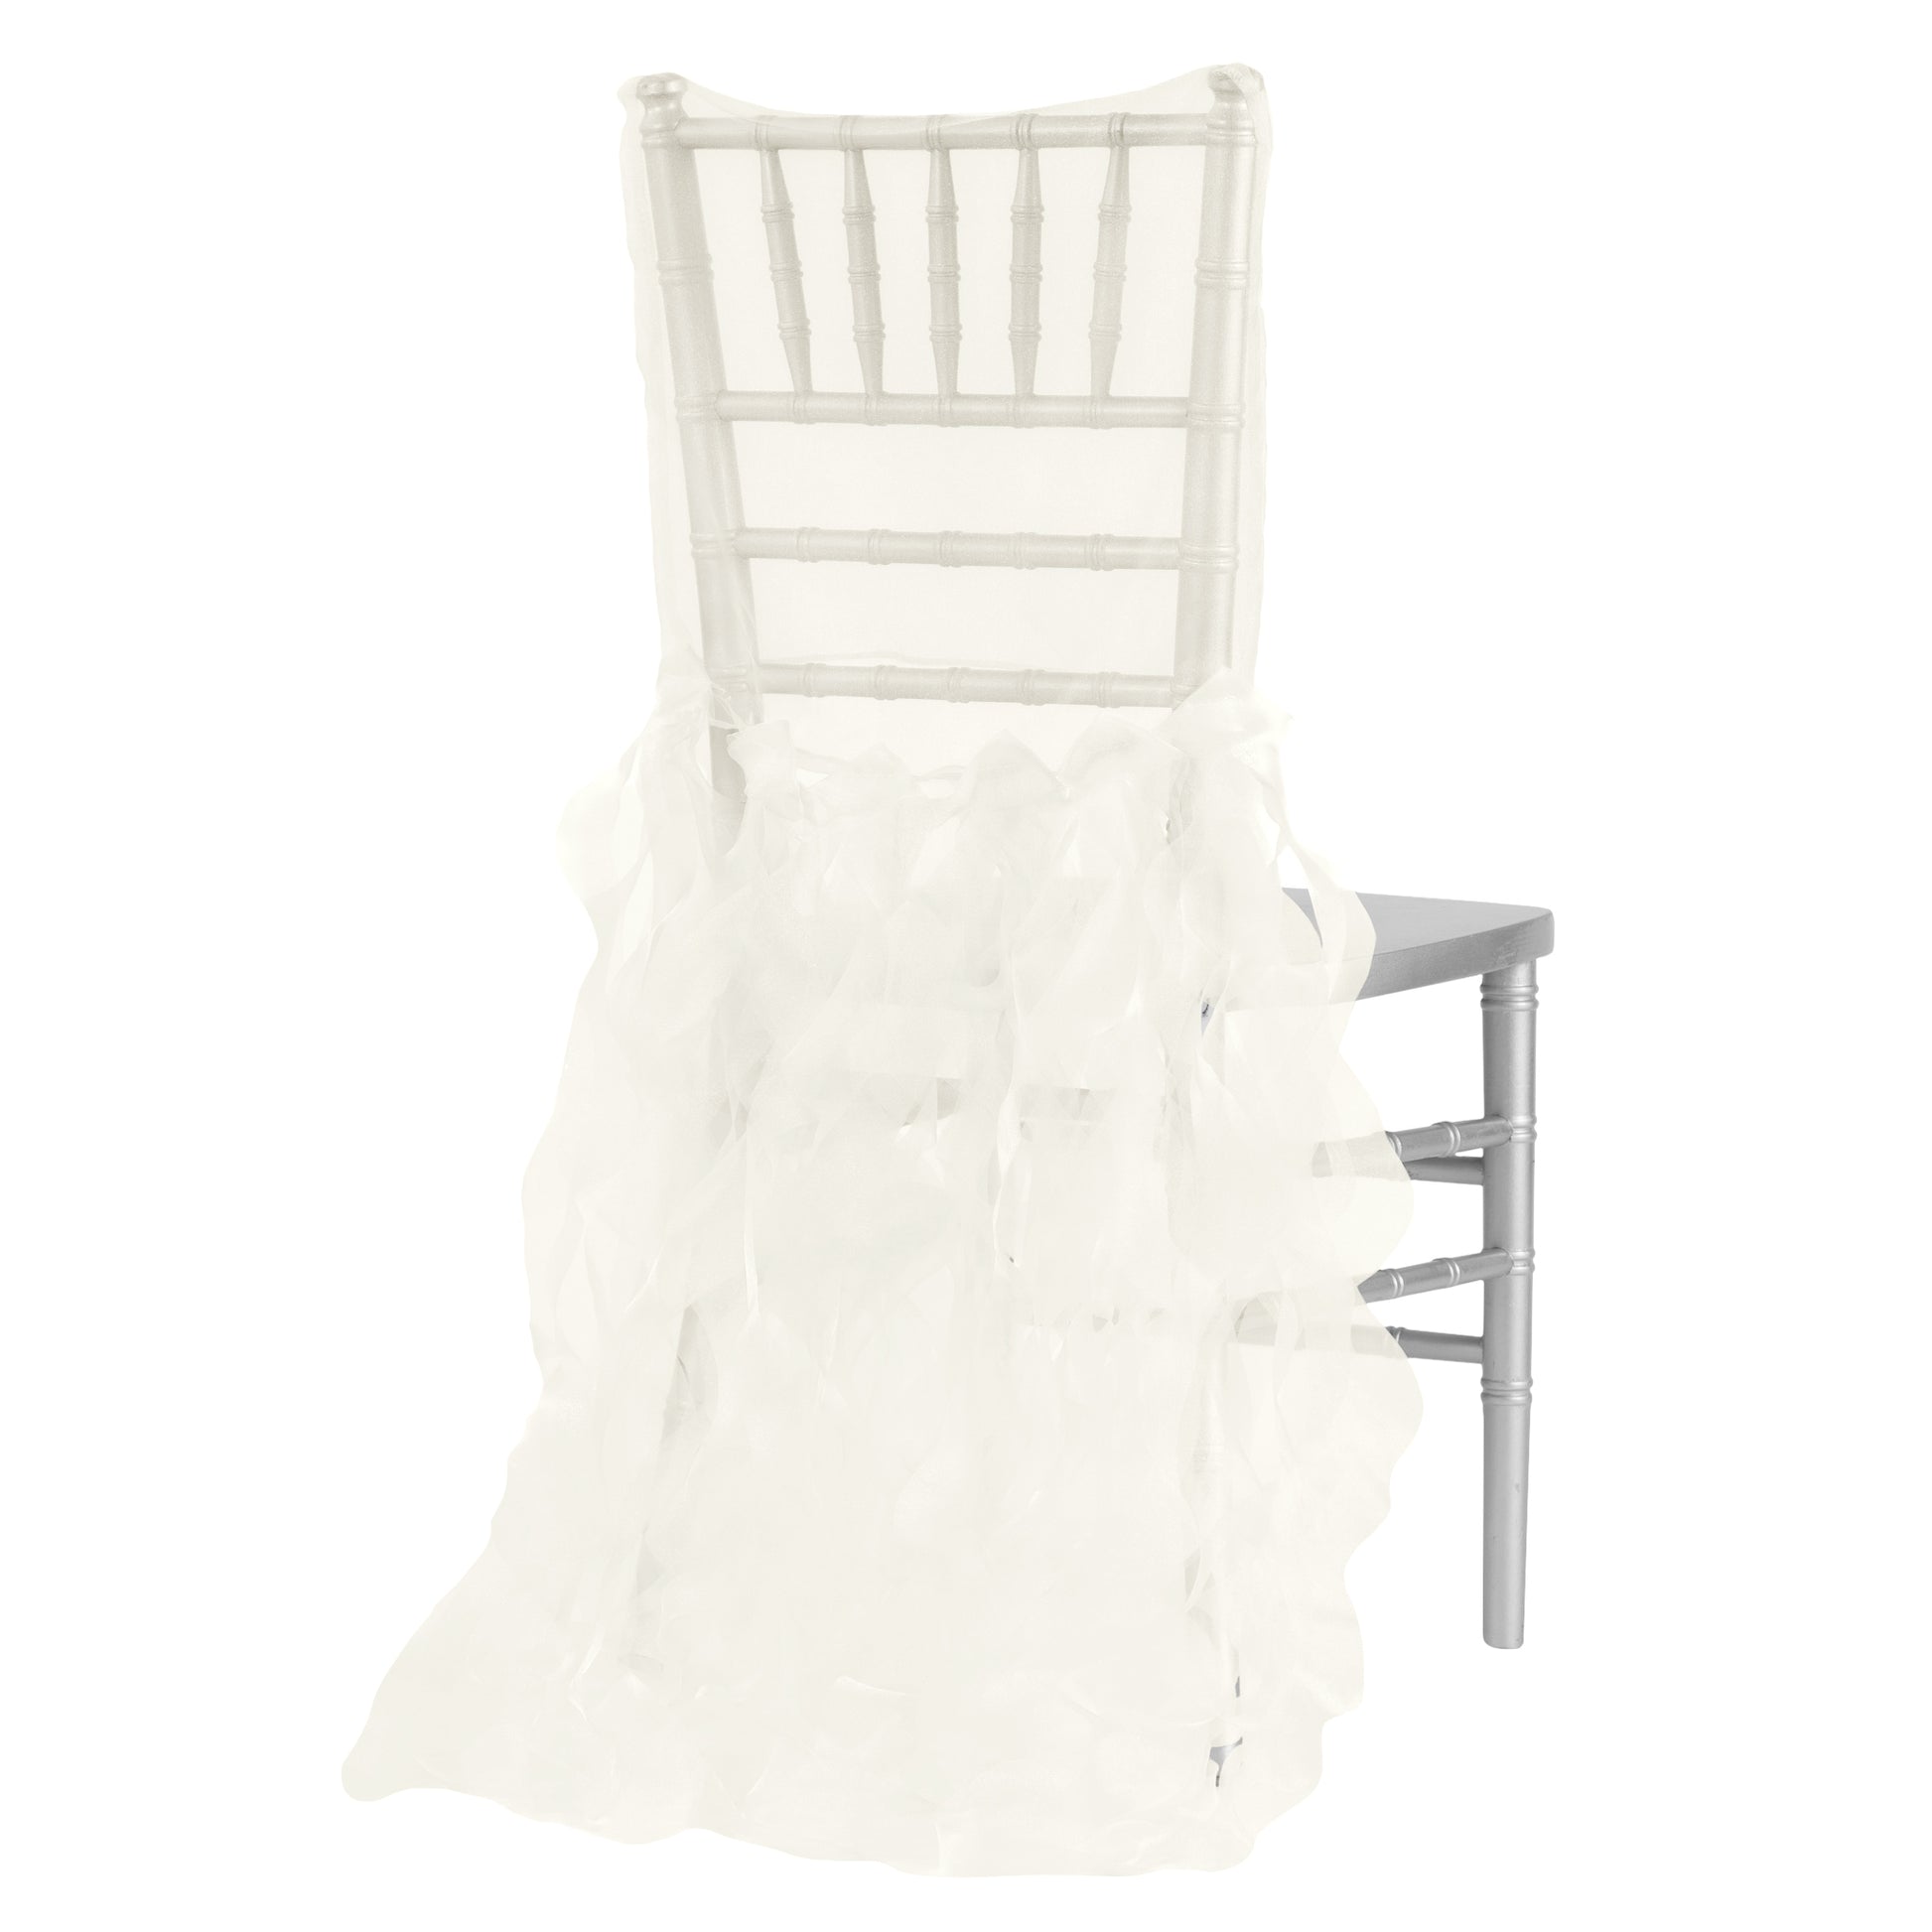 Curly Willow Chiavari Chair Back Slip Cover - Ivory - CV Linens